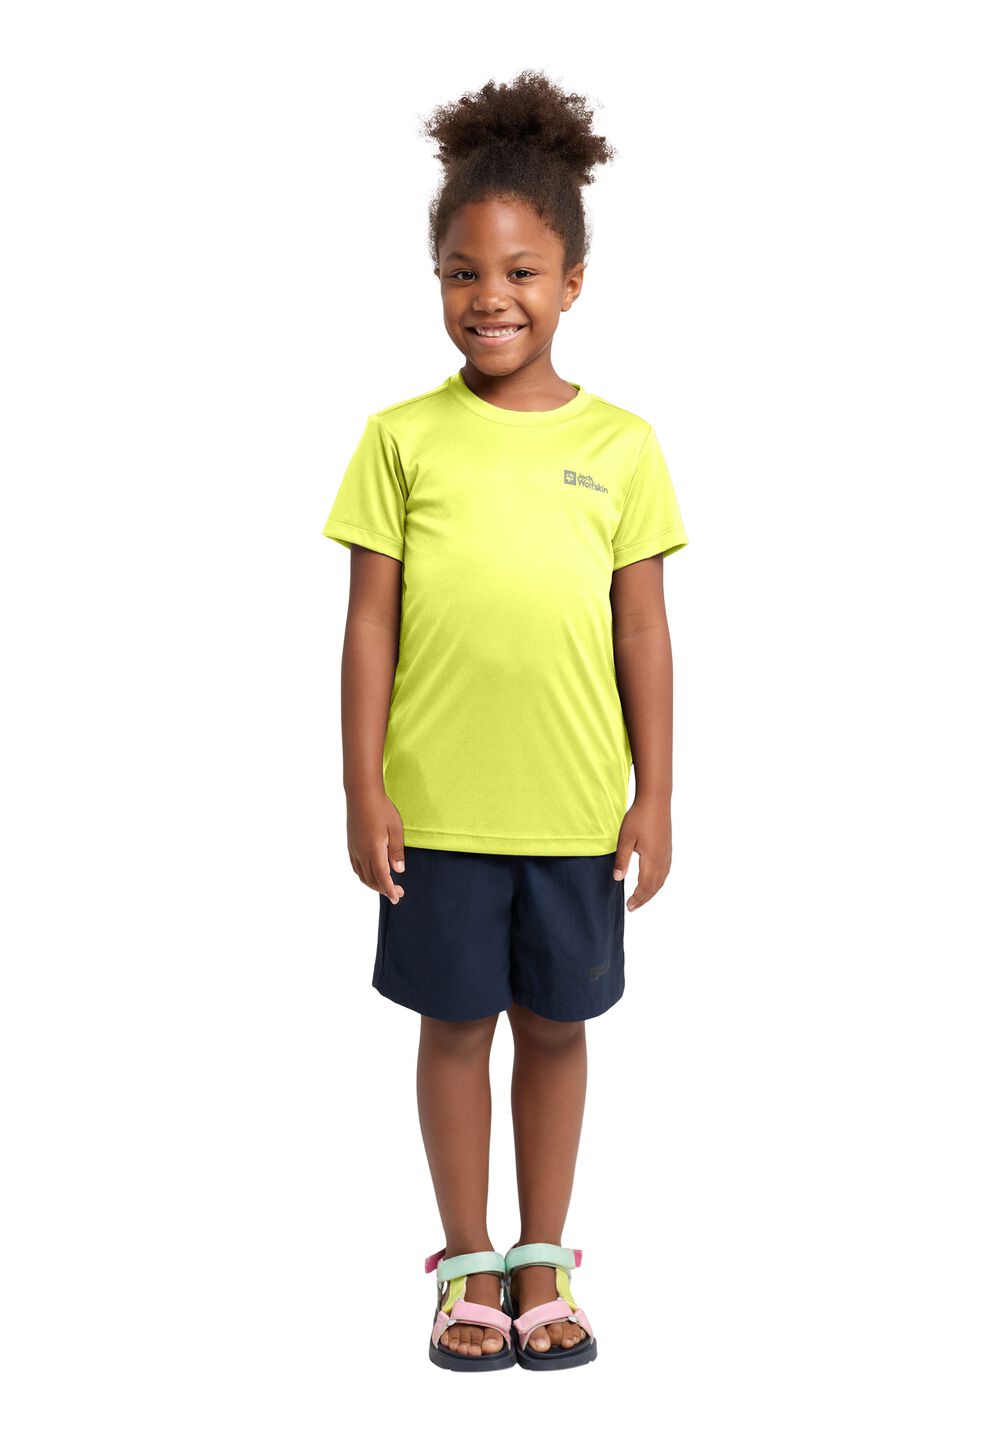 Jack Wolfskin Active Solid T-Shirt Kids Functioneel shirt Kinderen 176 oranje firefly